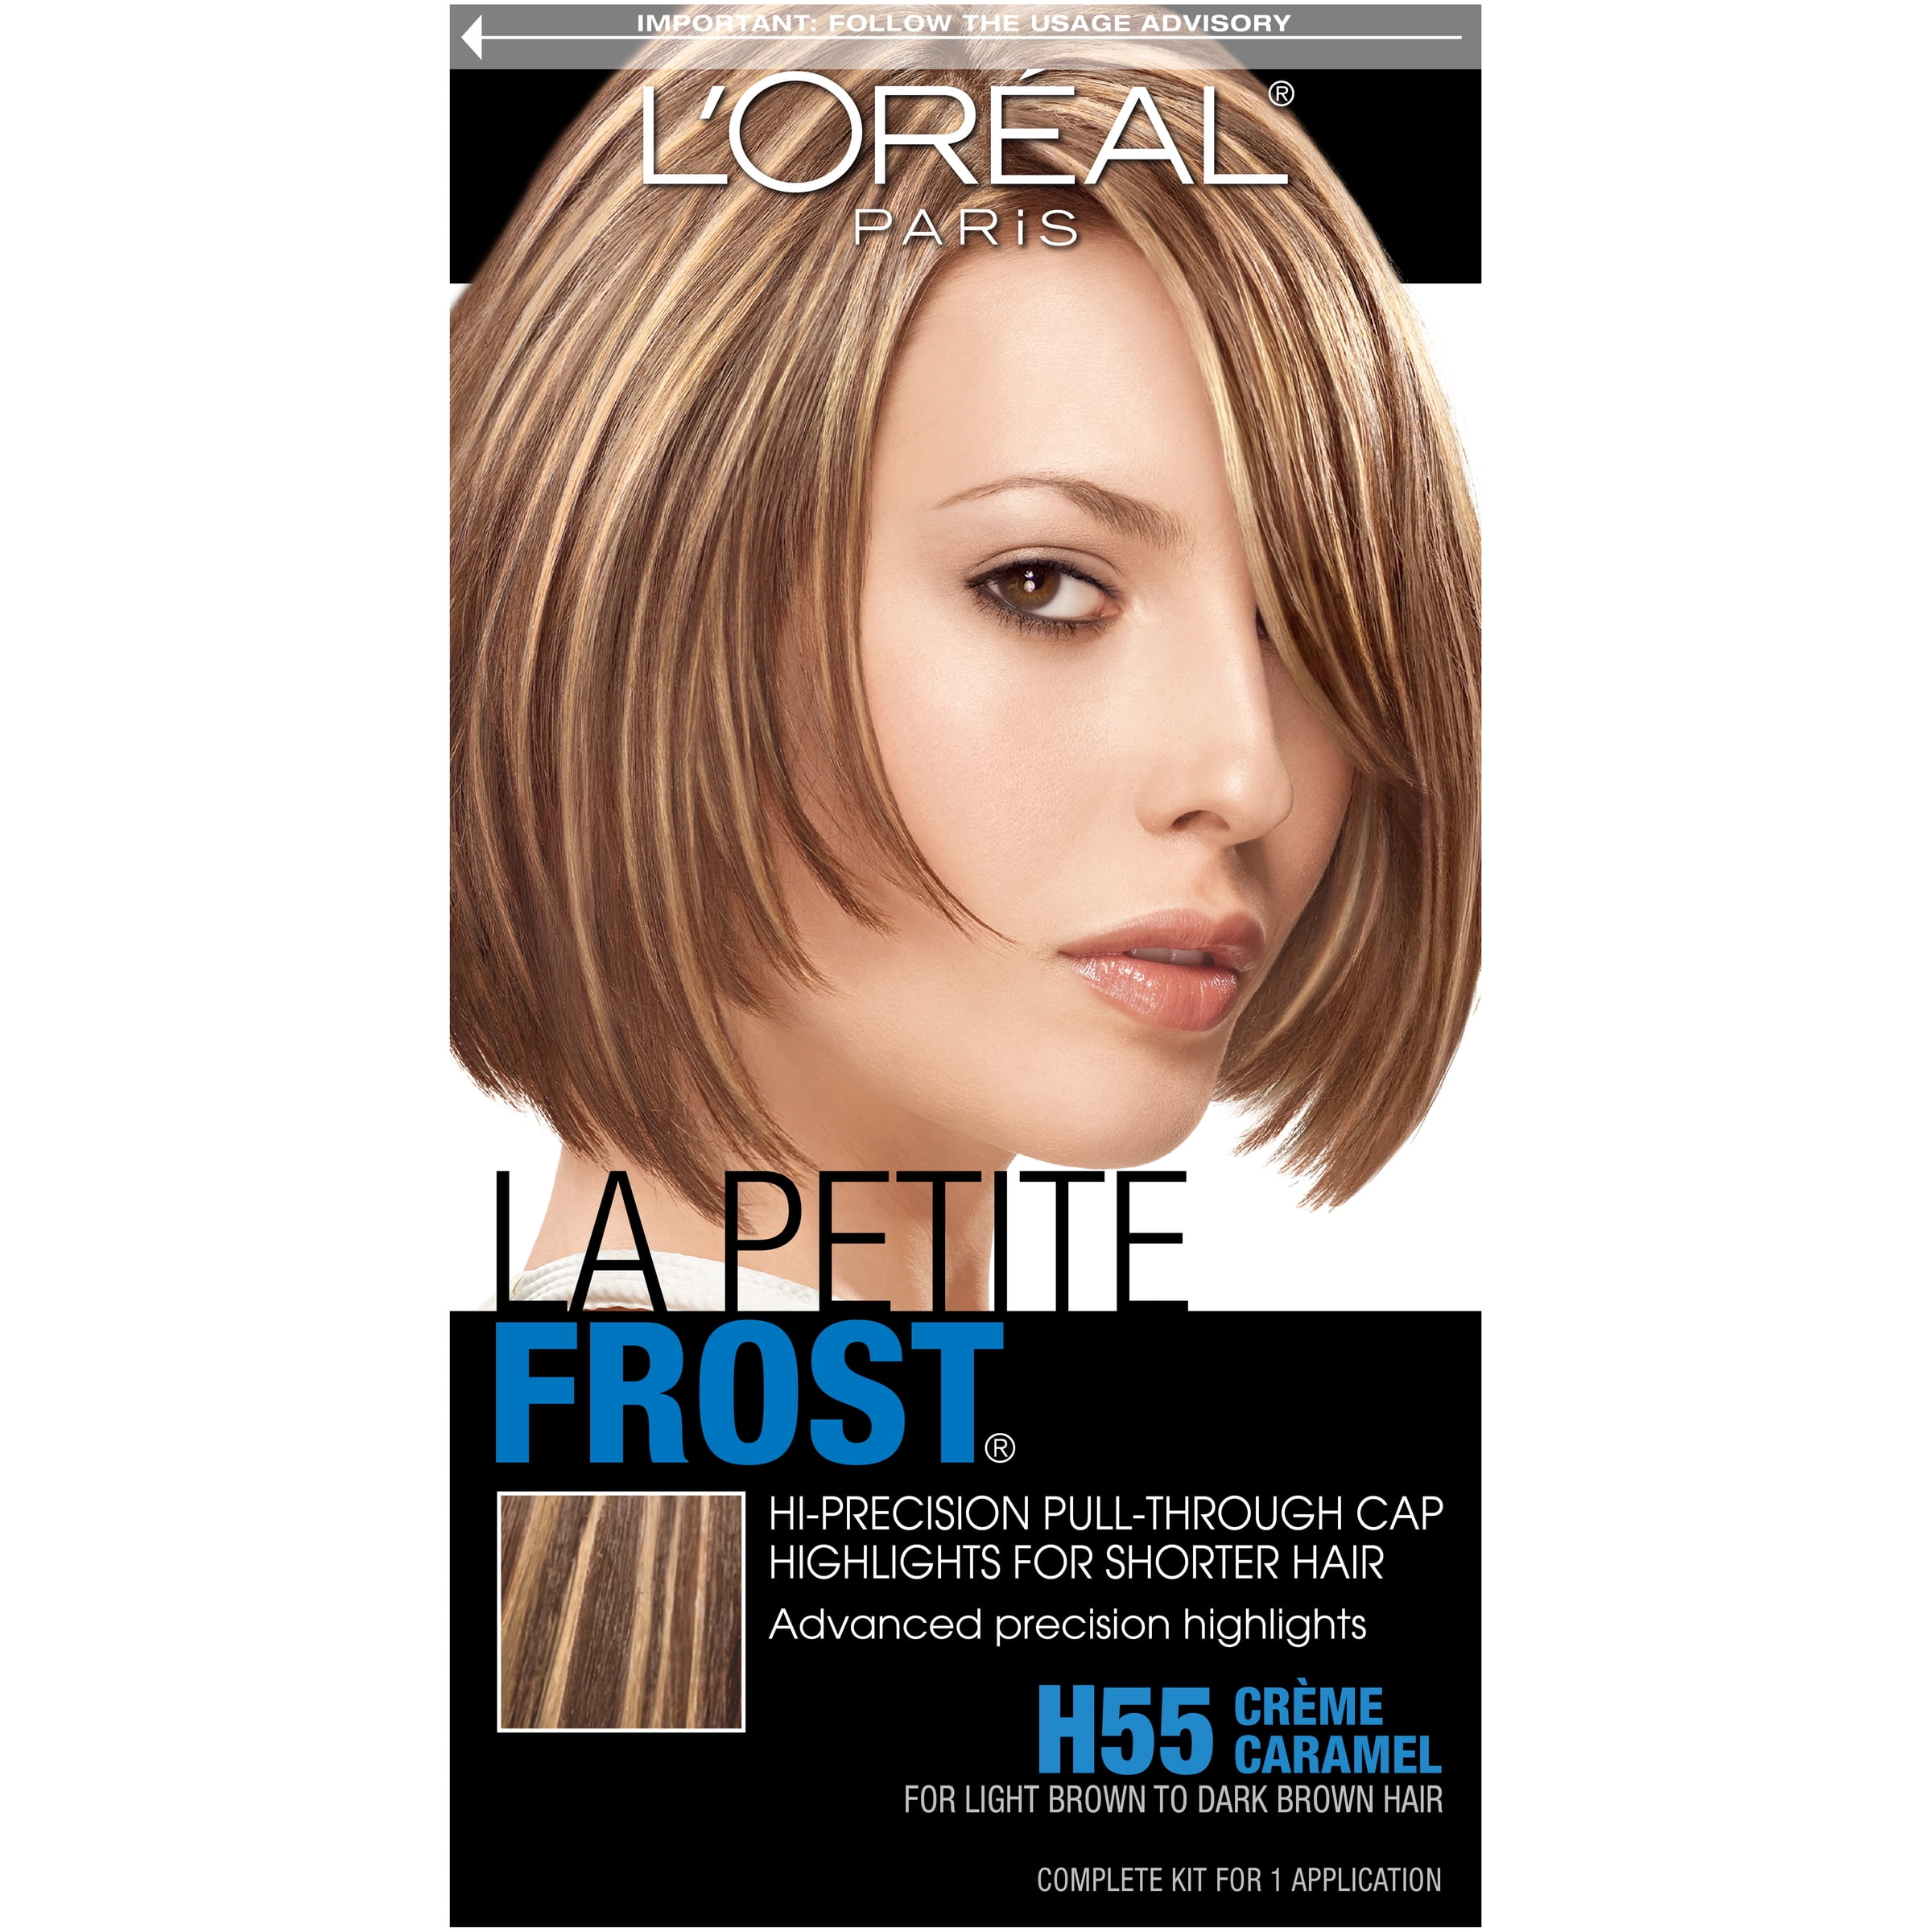 L'Oreal Paris La Petite Hair Highlights, H55 Creme Caramel - Walmart.com